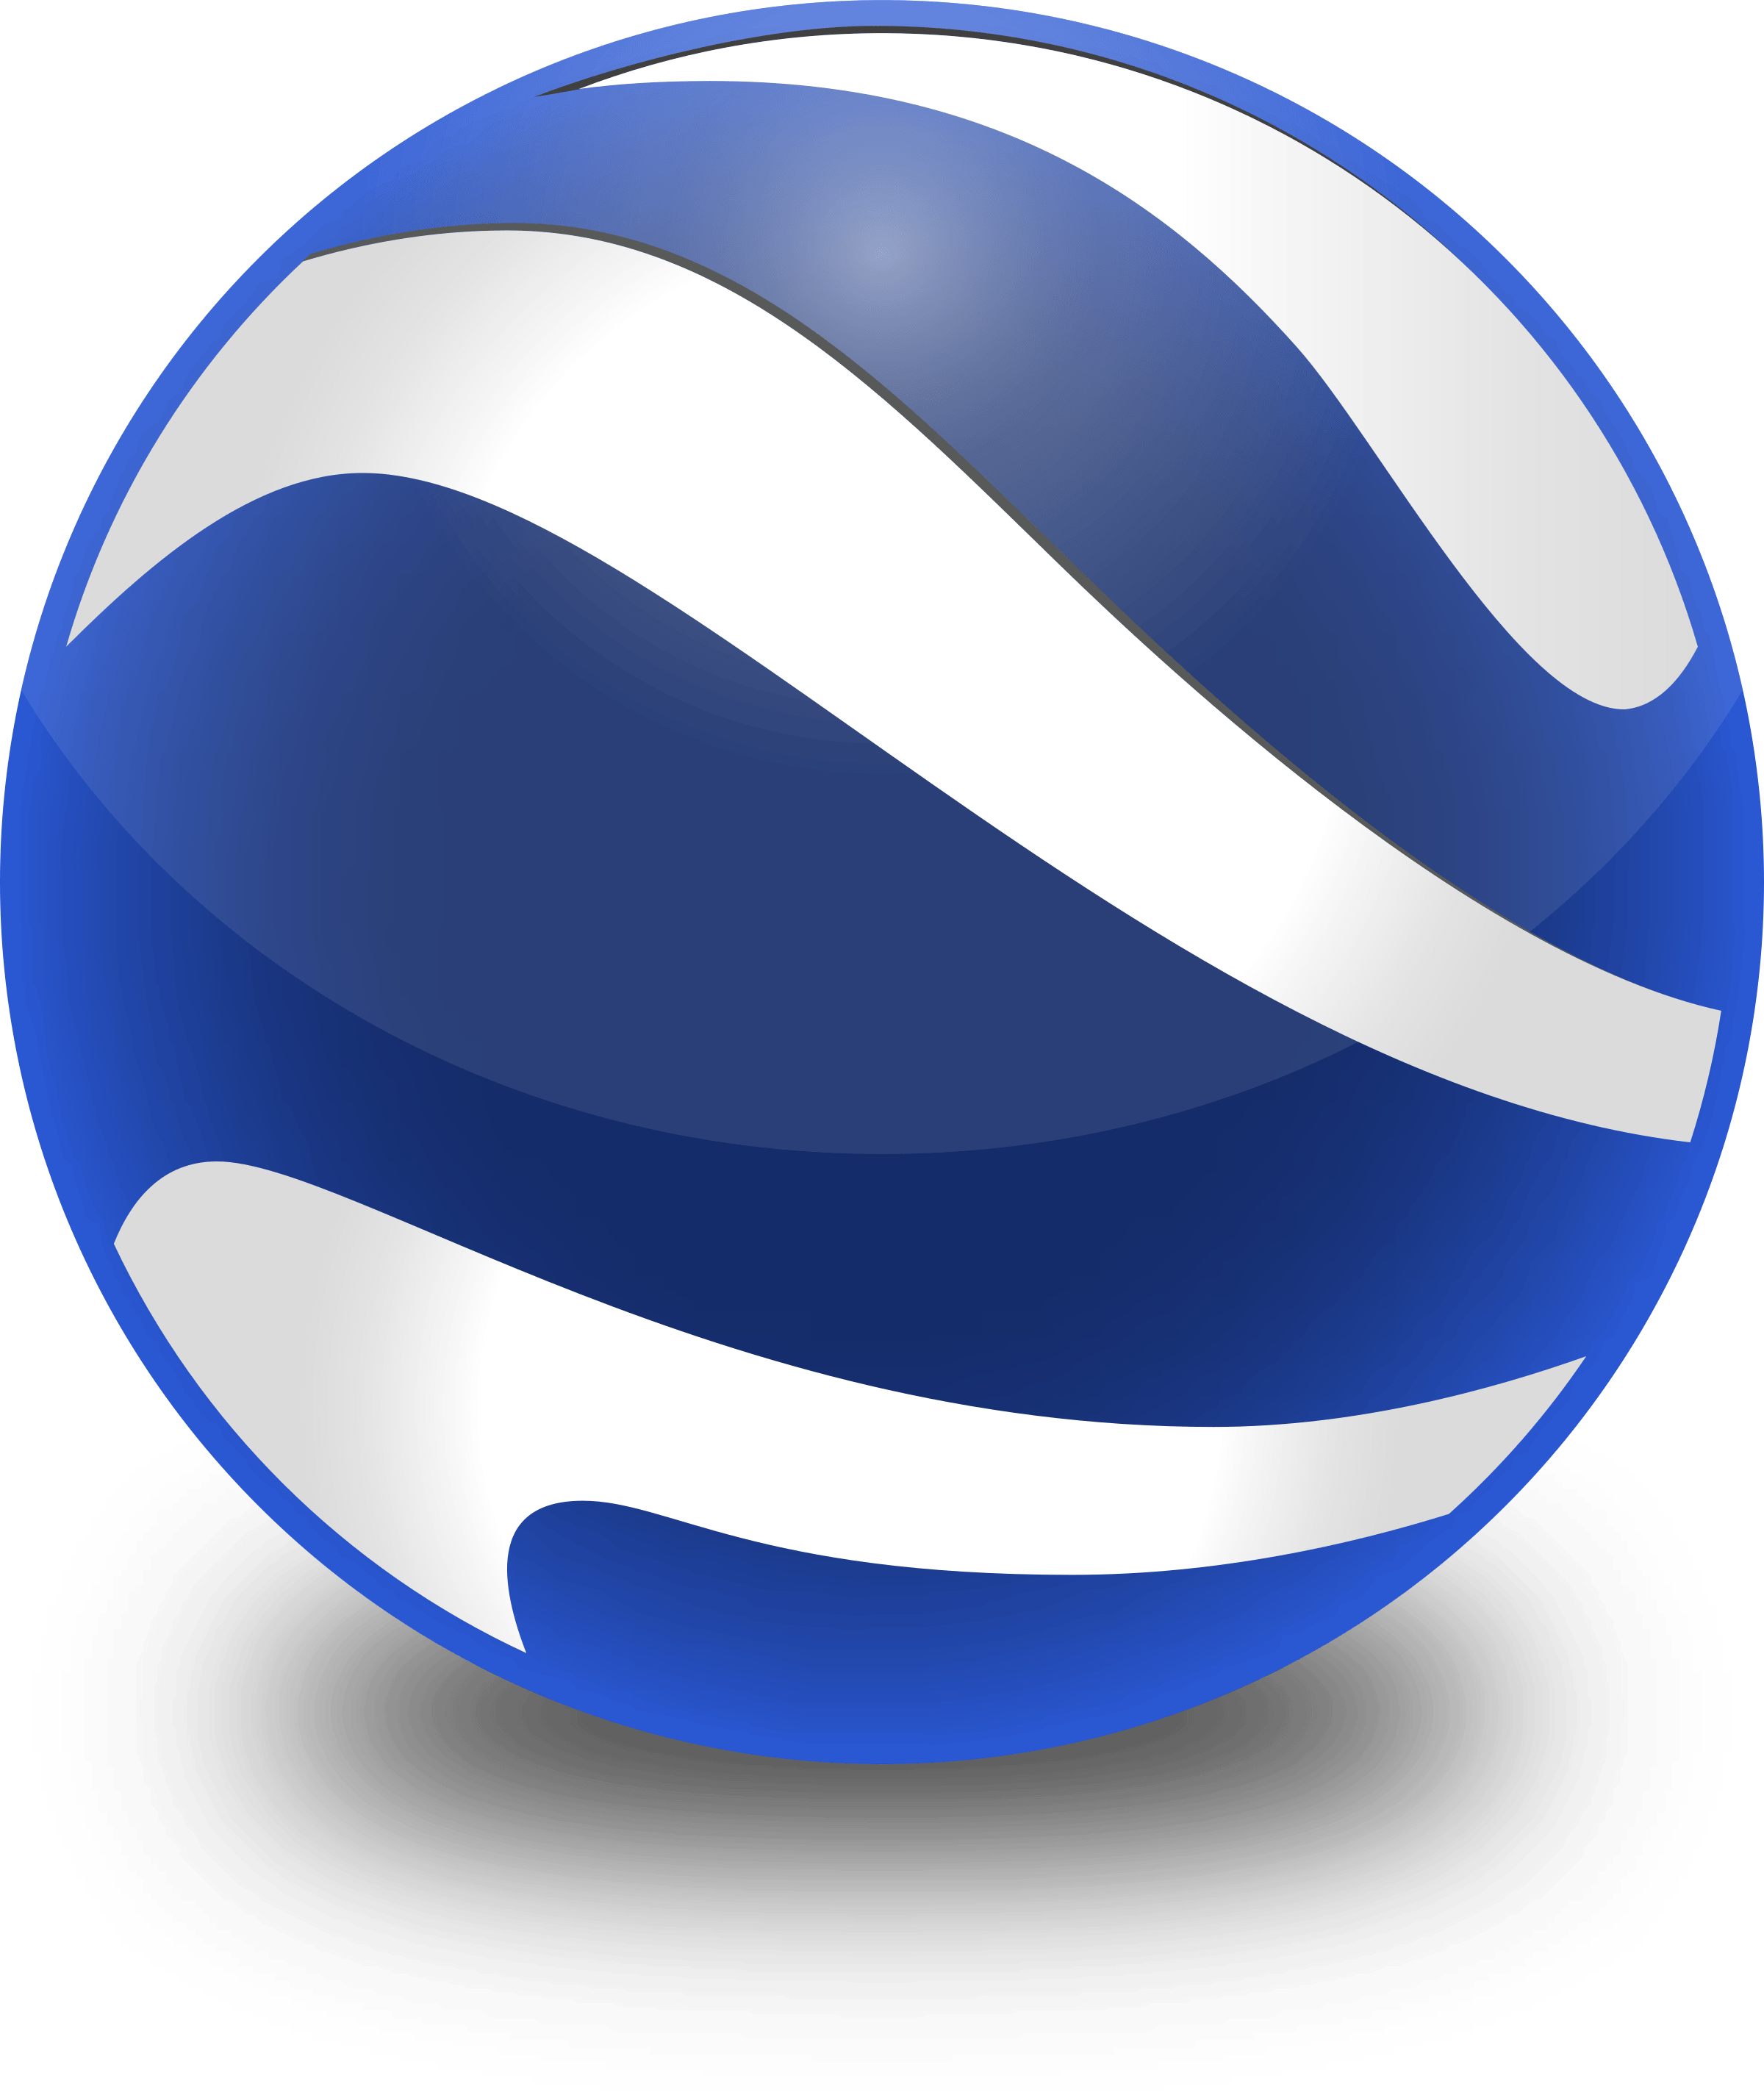 Google Earth Logo - Google Earth Logo PNG Transparent & SVG Vector - Freebie Supply